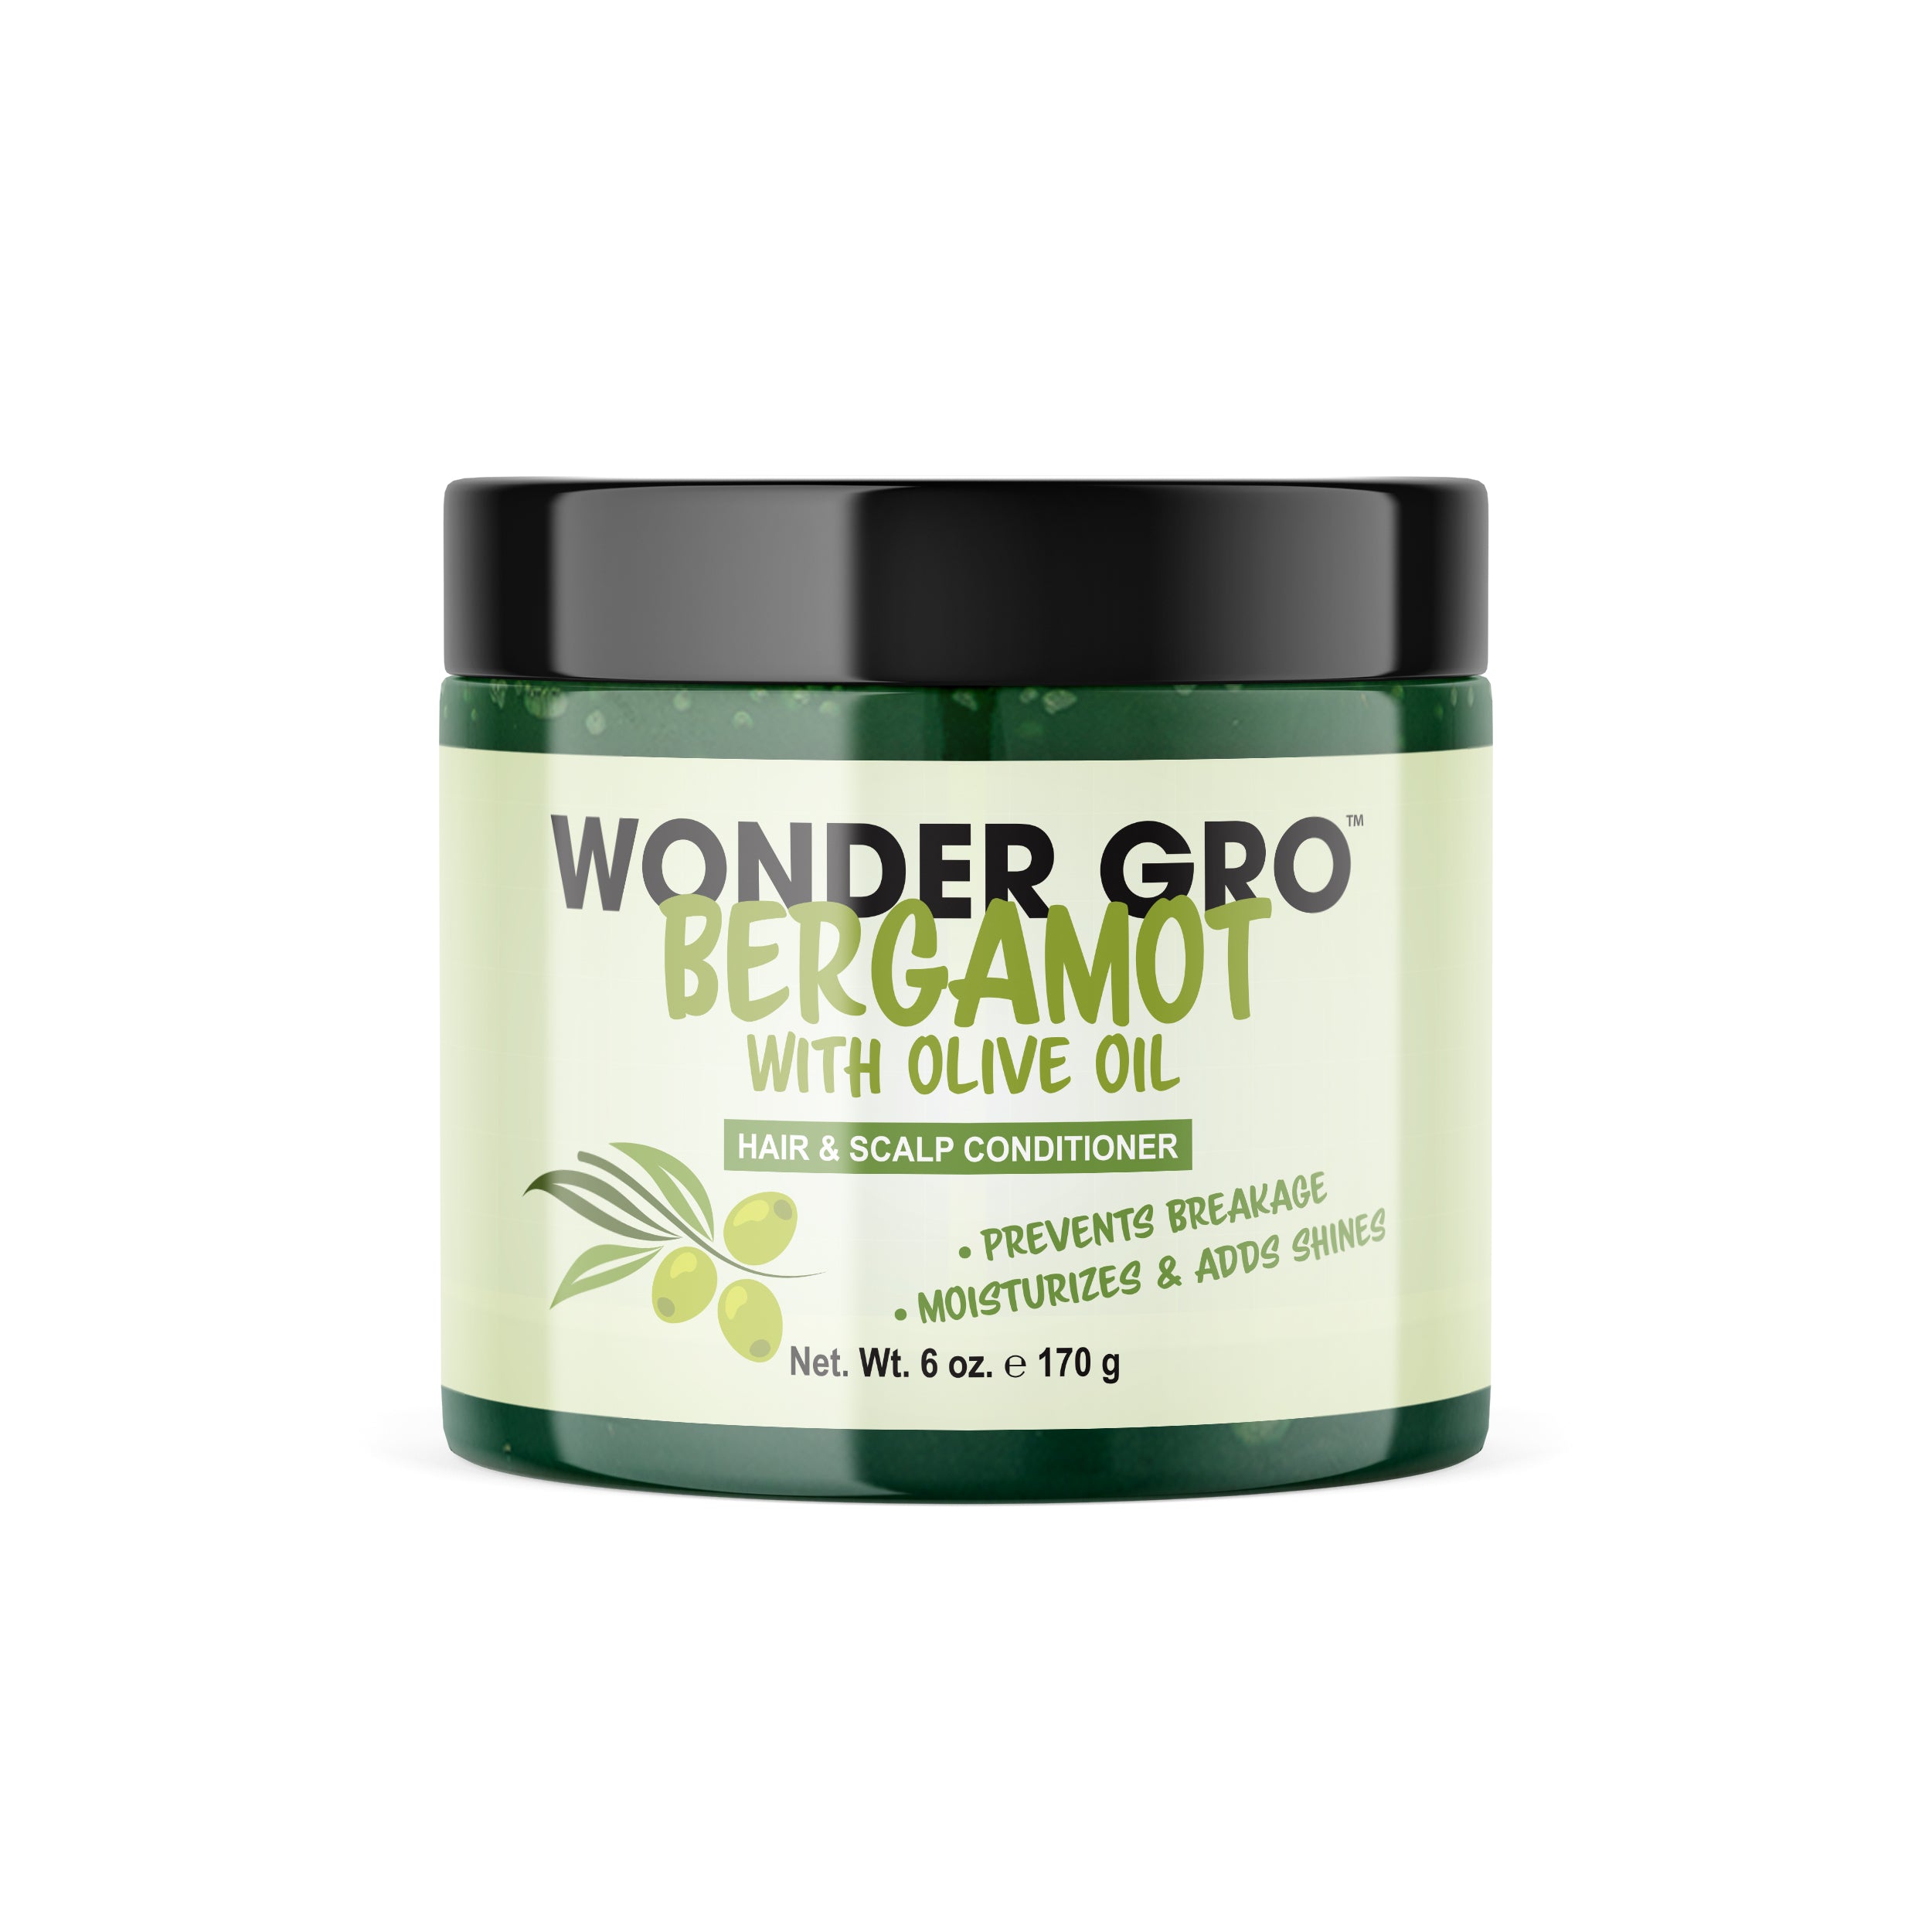 Wonder Gro Bergamot Hair & Scalp Conditioner with Olive Oil